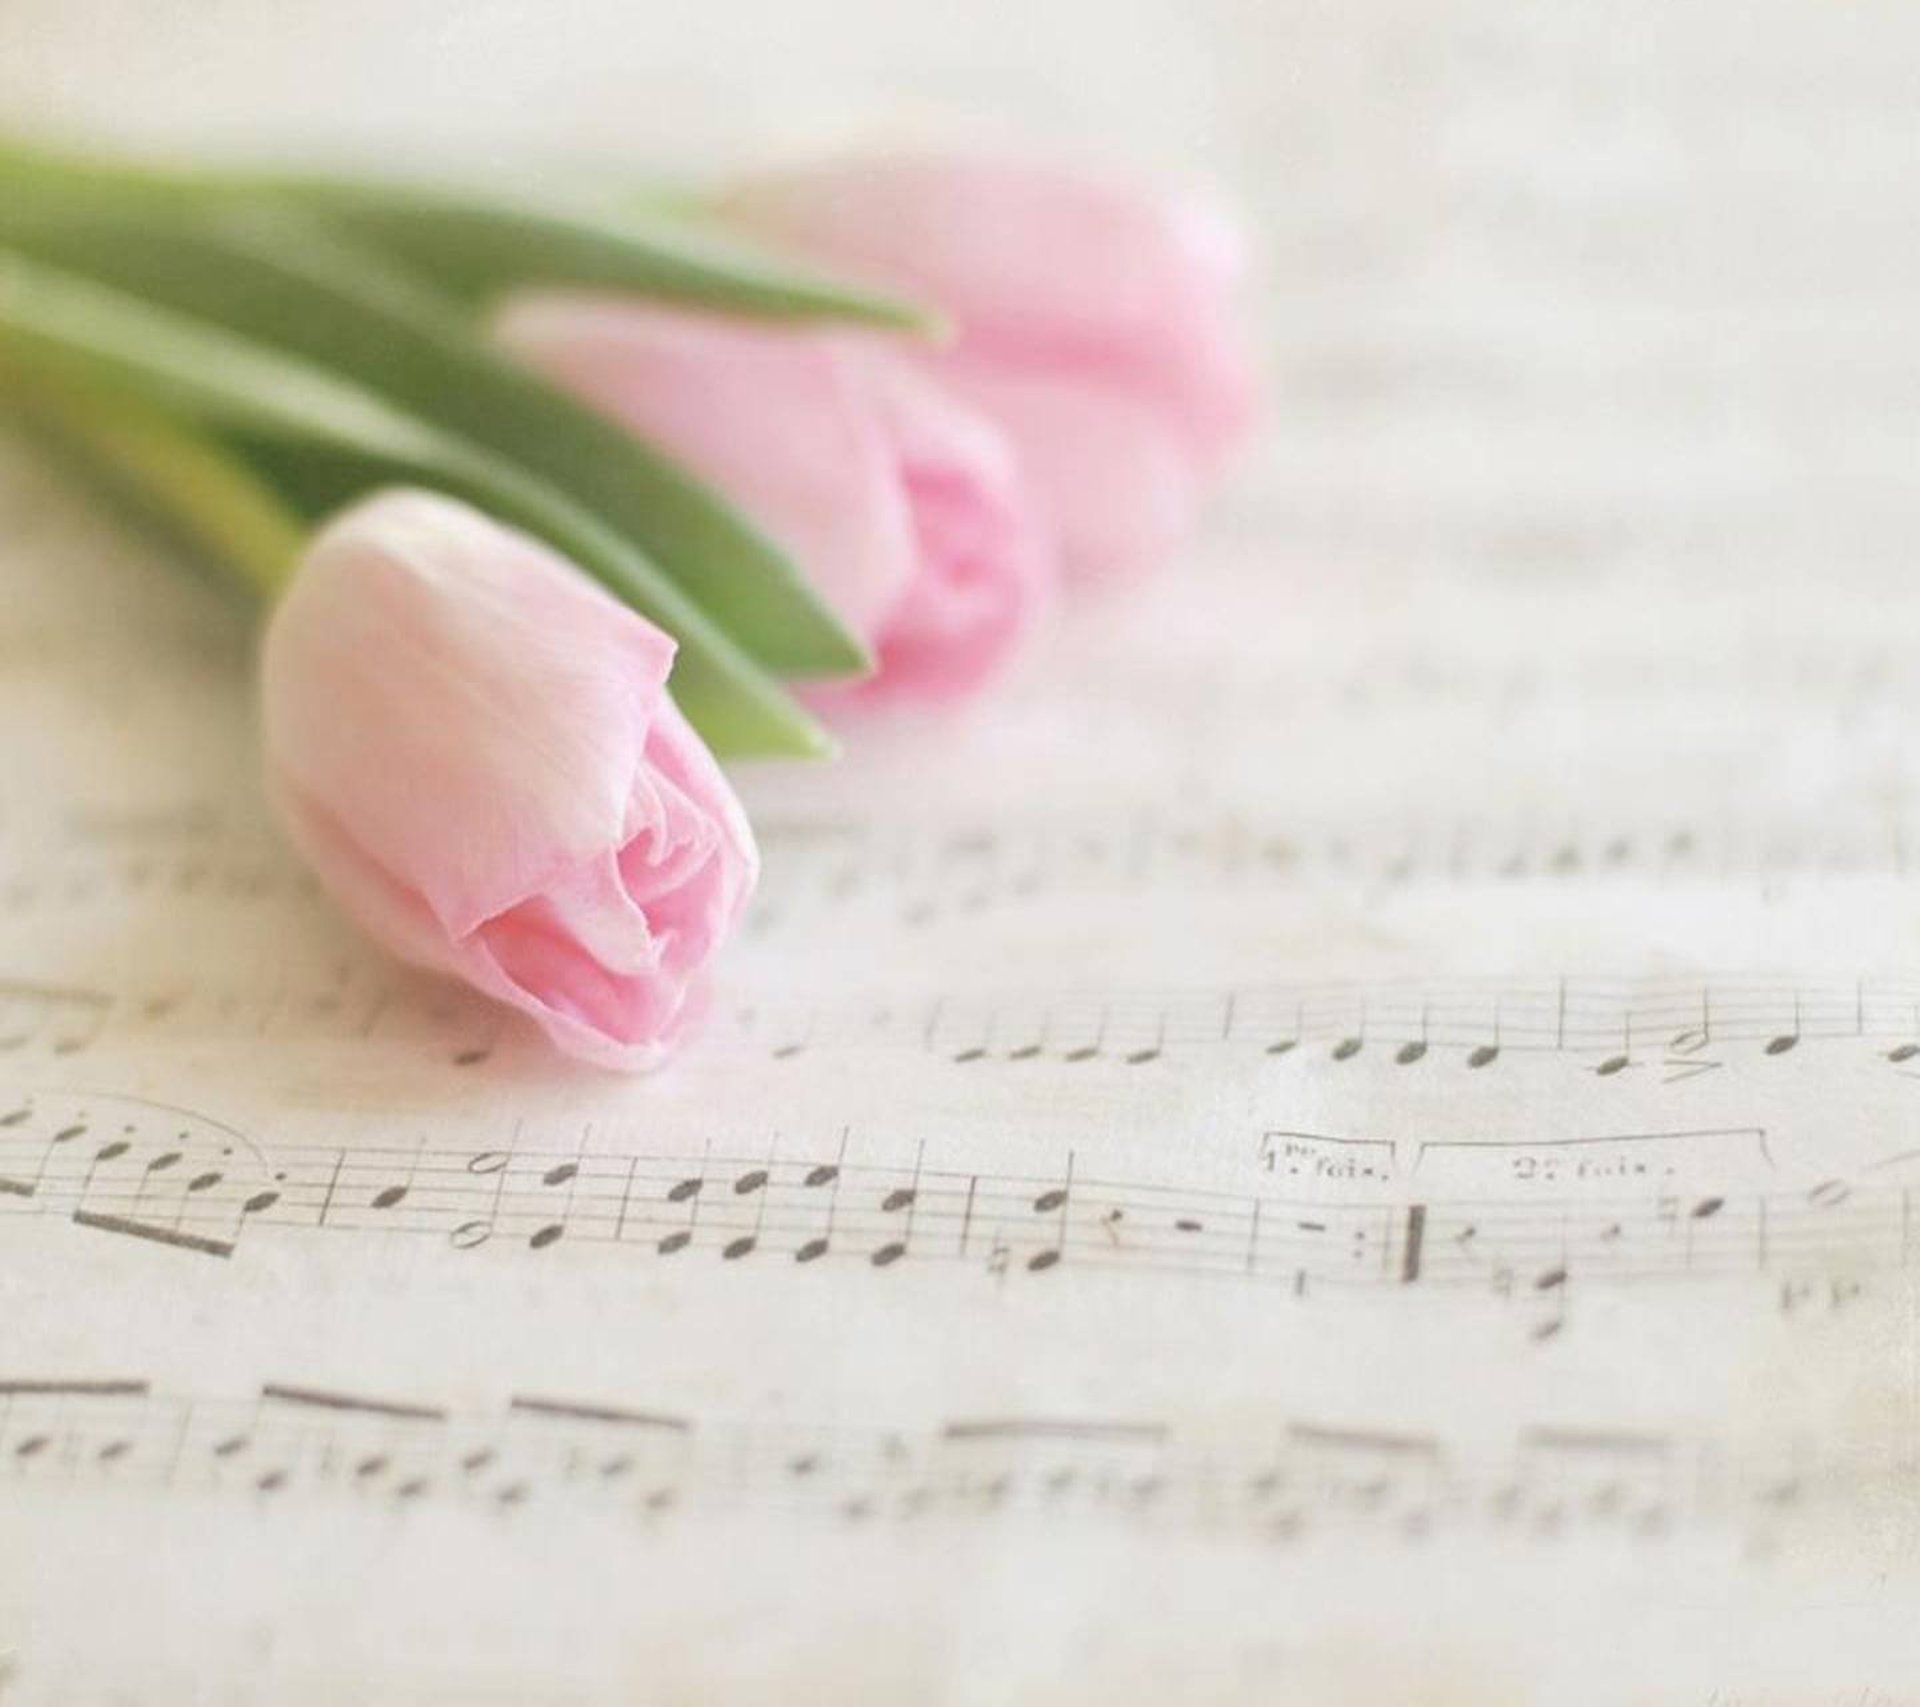 Самая нежная мелодия. Ноты и цветы. Музыкальный цветок. Тюльпаны и Ноты. Тюльпаны фон.